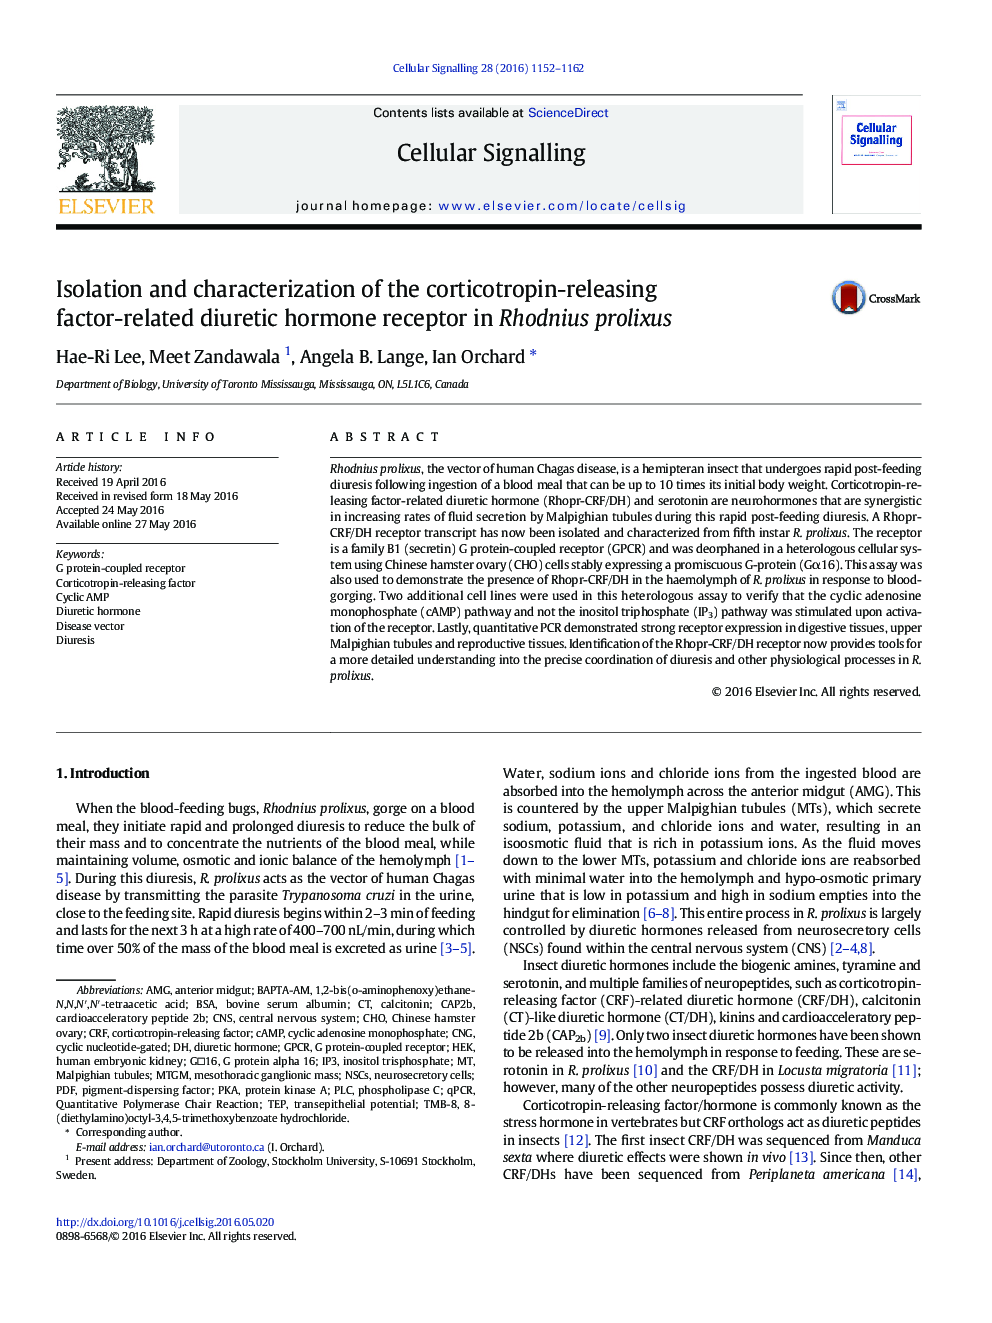 Isolation and characterization of the corticotropin-releasing factor-related diuretic hormone receptor in Rhodnius prolixus